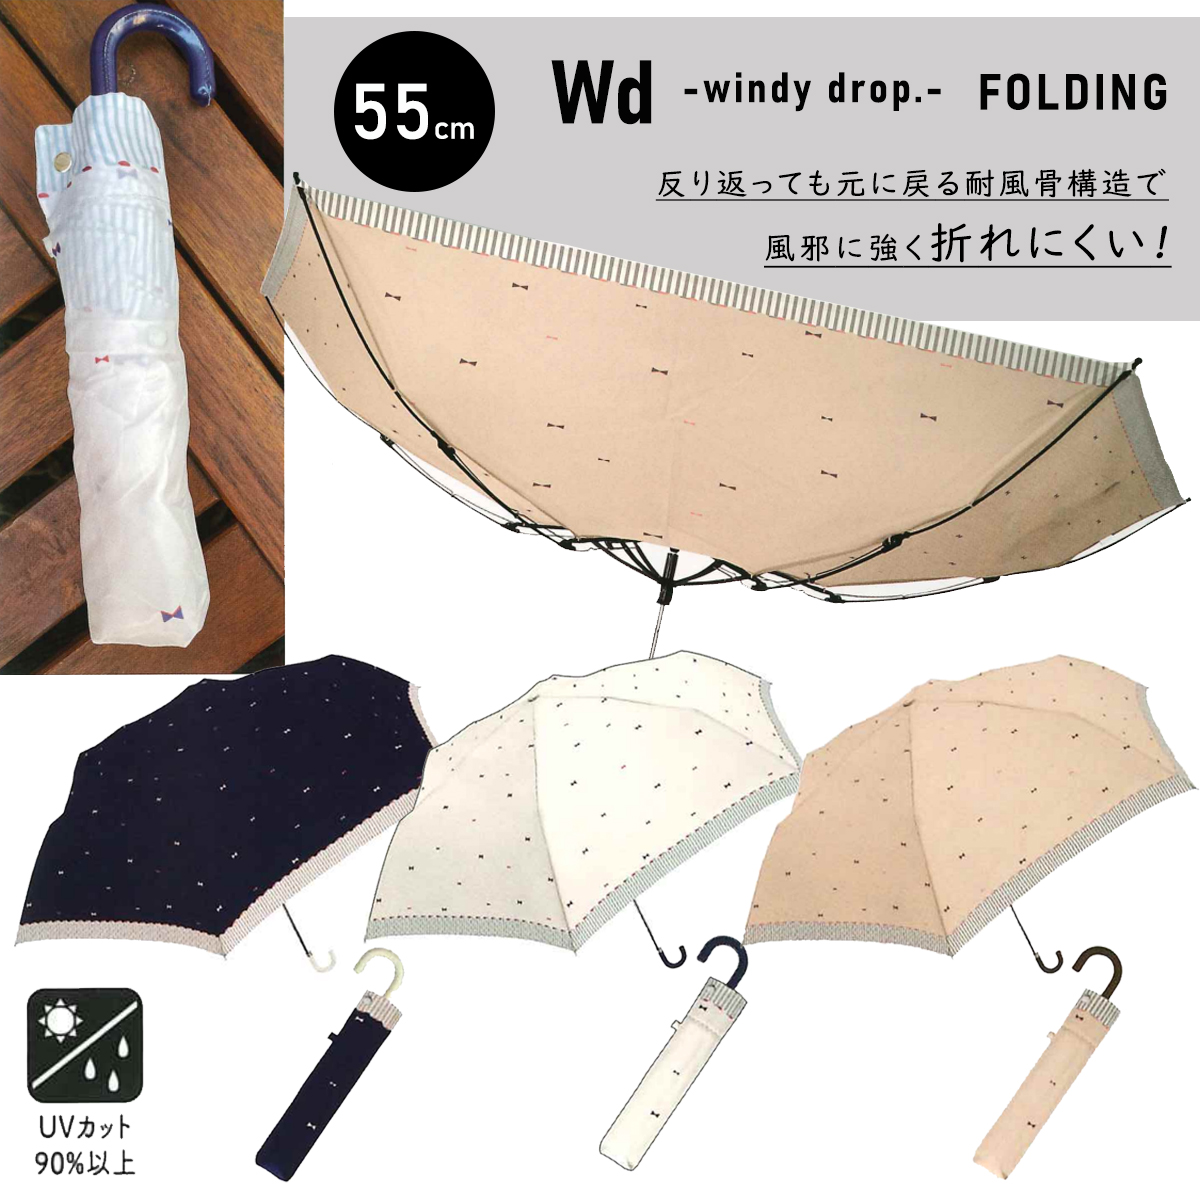 【CRUX】耐風 TINEY RIBBON 55cm 折りたたみ 婦人傘